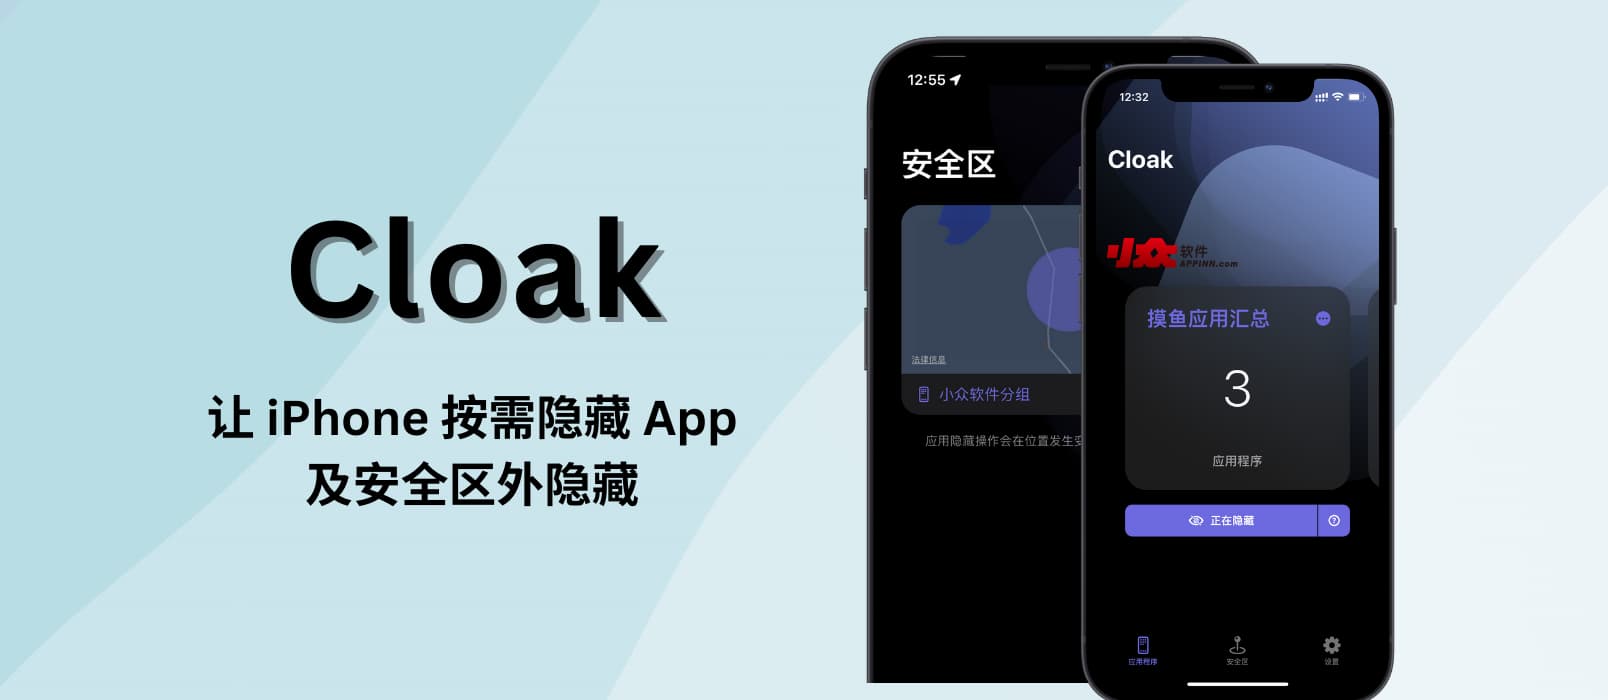 Cloak - 让 iPhone 隐藏 App，支持基于地理位置的自动隐藏 1